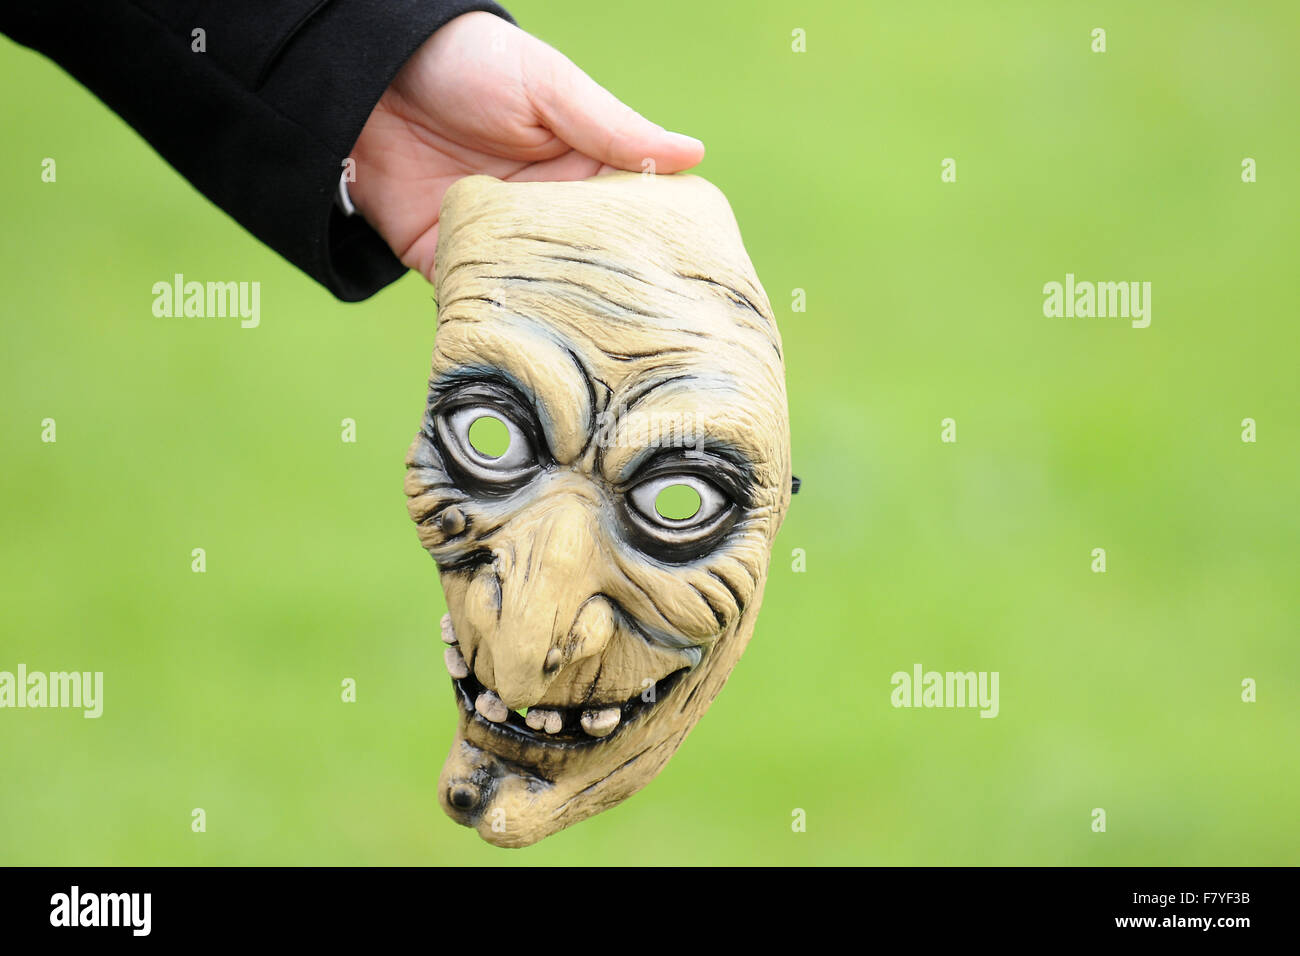 Scary frightening Halloween mask Stock Photo